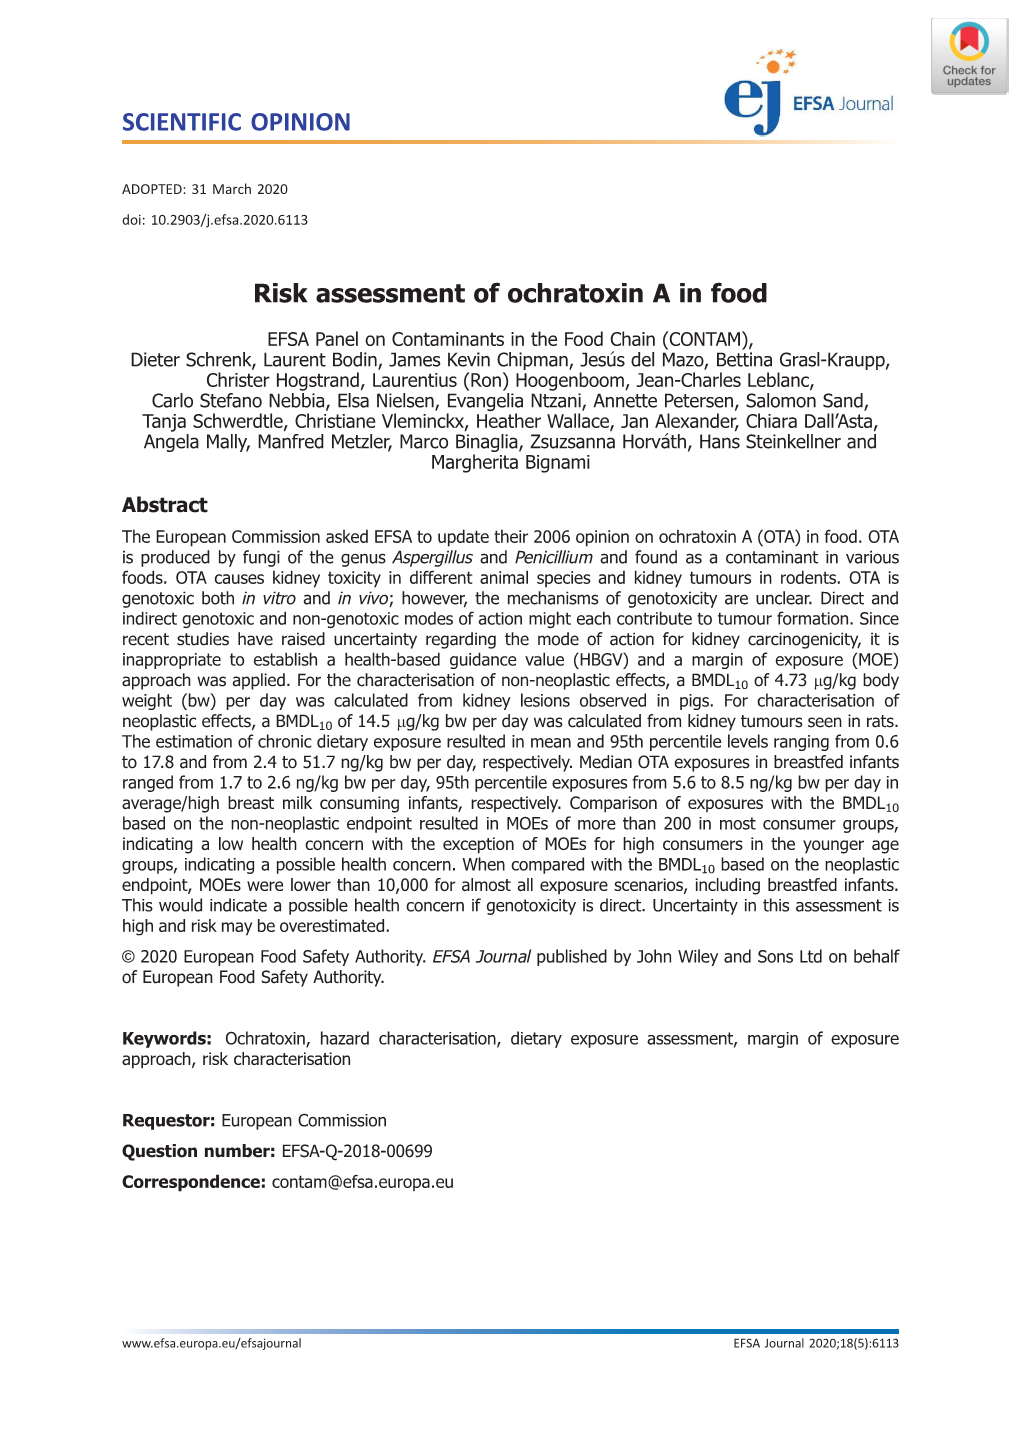 Risk Assessment of Ochratoxin a in Food